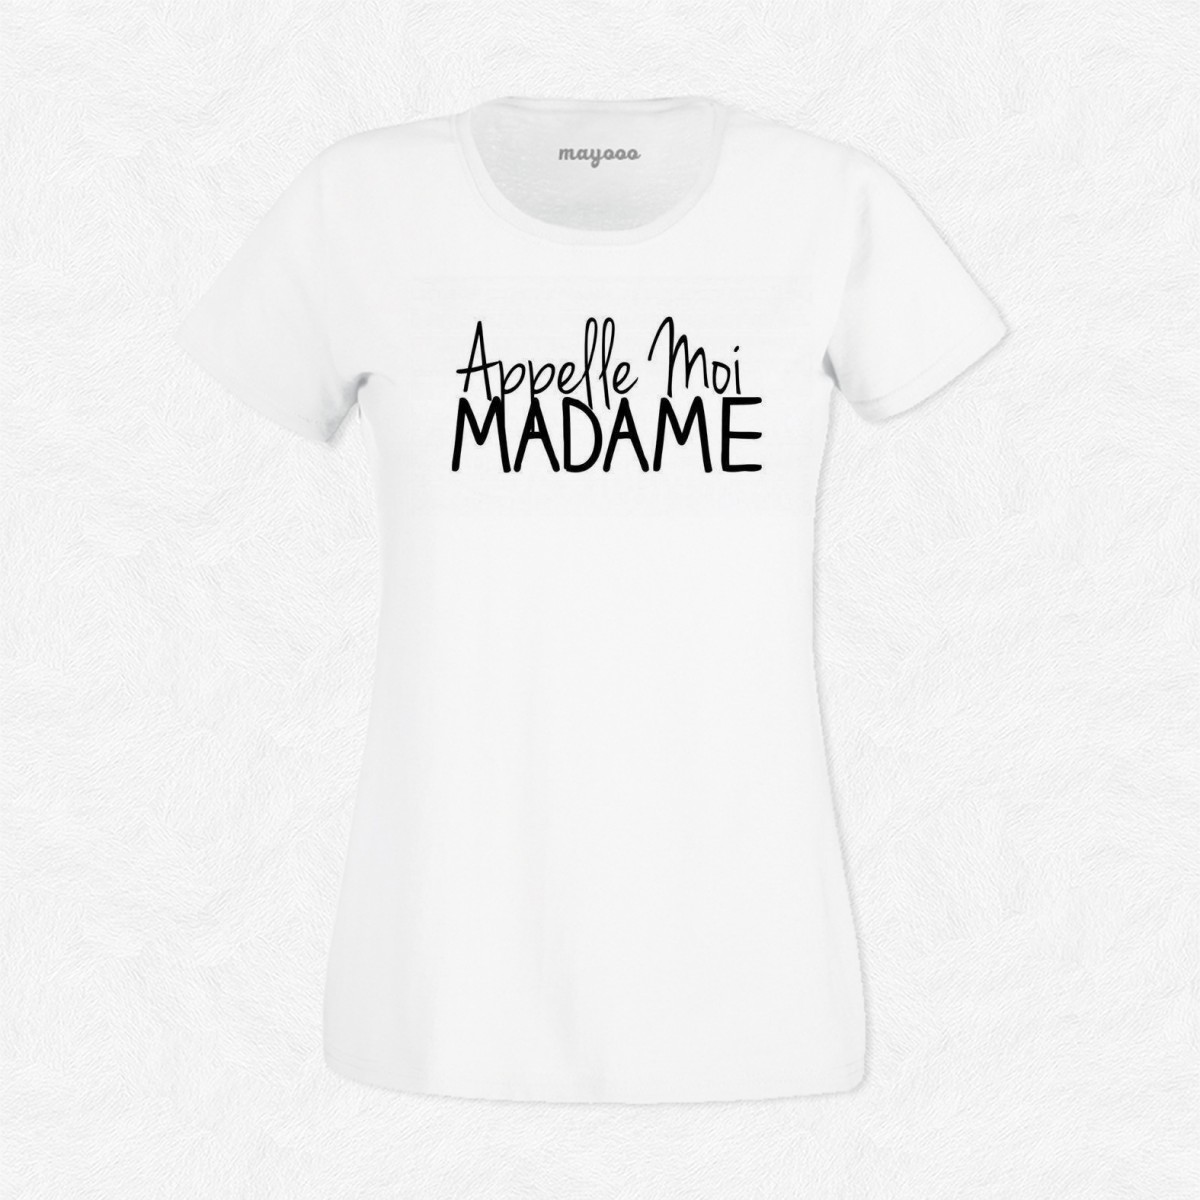 T-shirt Appelle moi madame